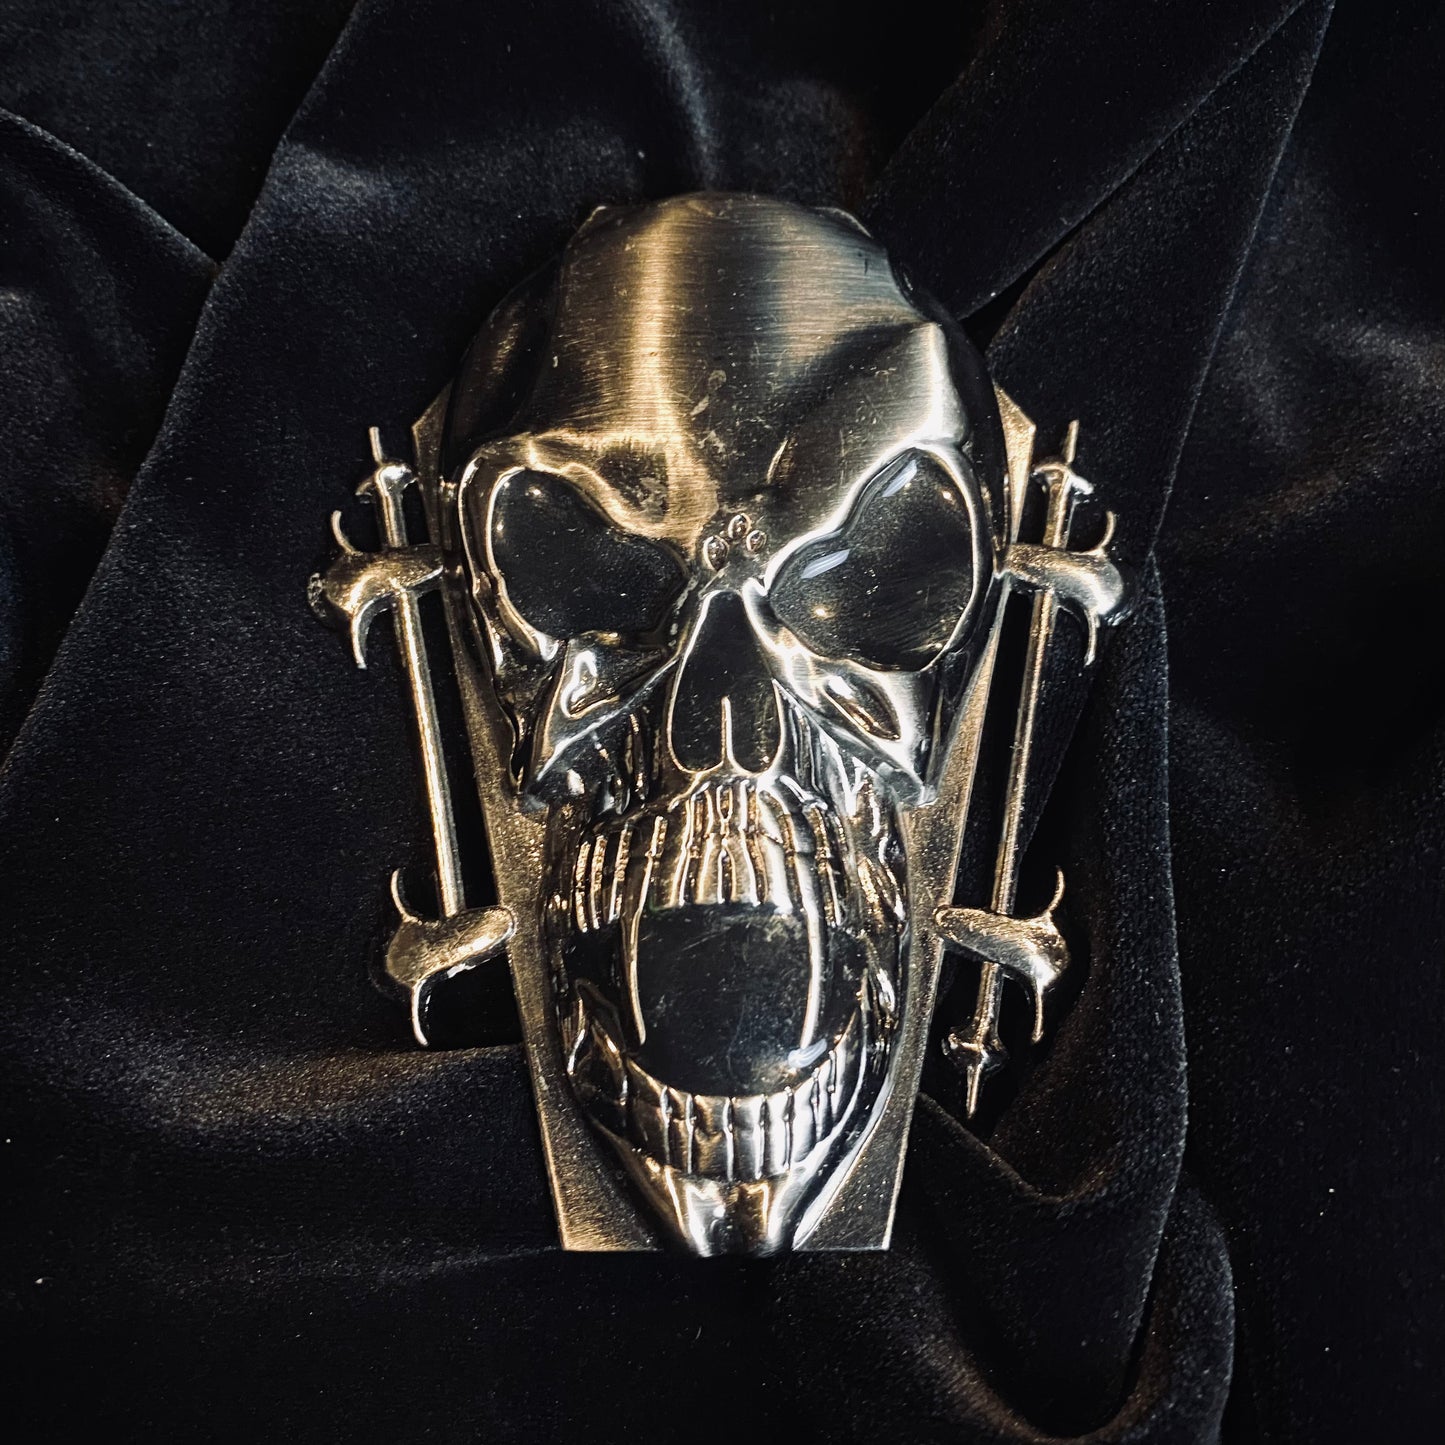 Stainless Steel Skull Coffin Shaped belt buckle